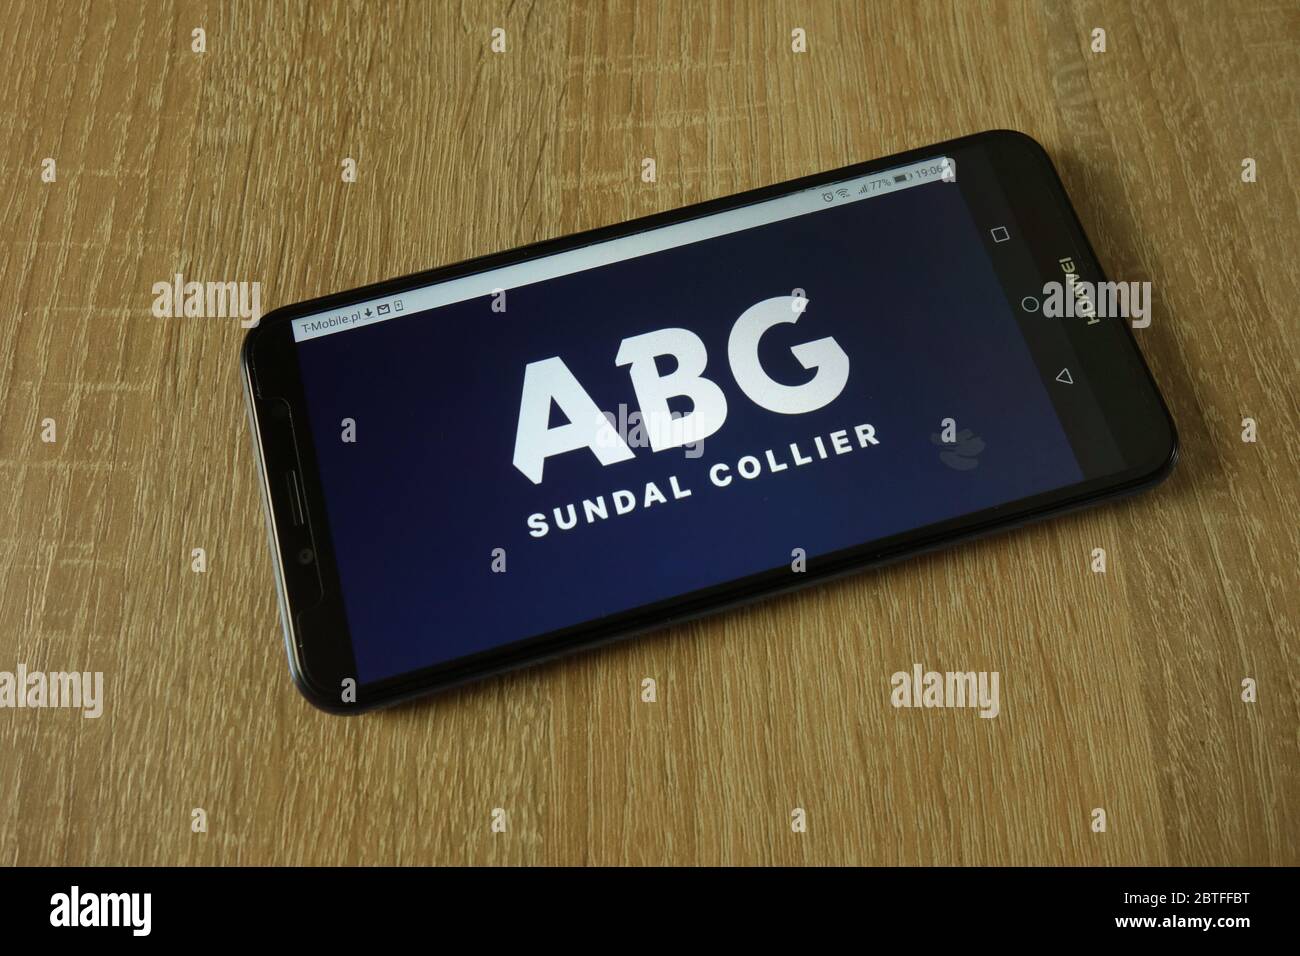 ABG Sundal Collier bank logo displayed on smartphone Stock Photo - Alamy